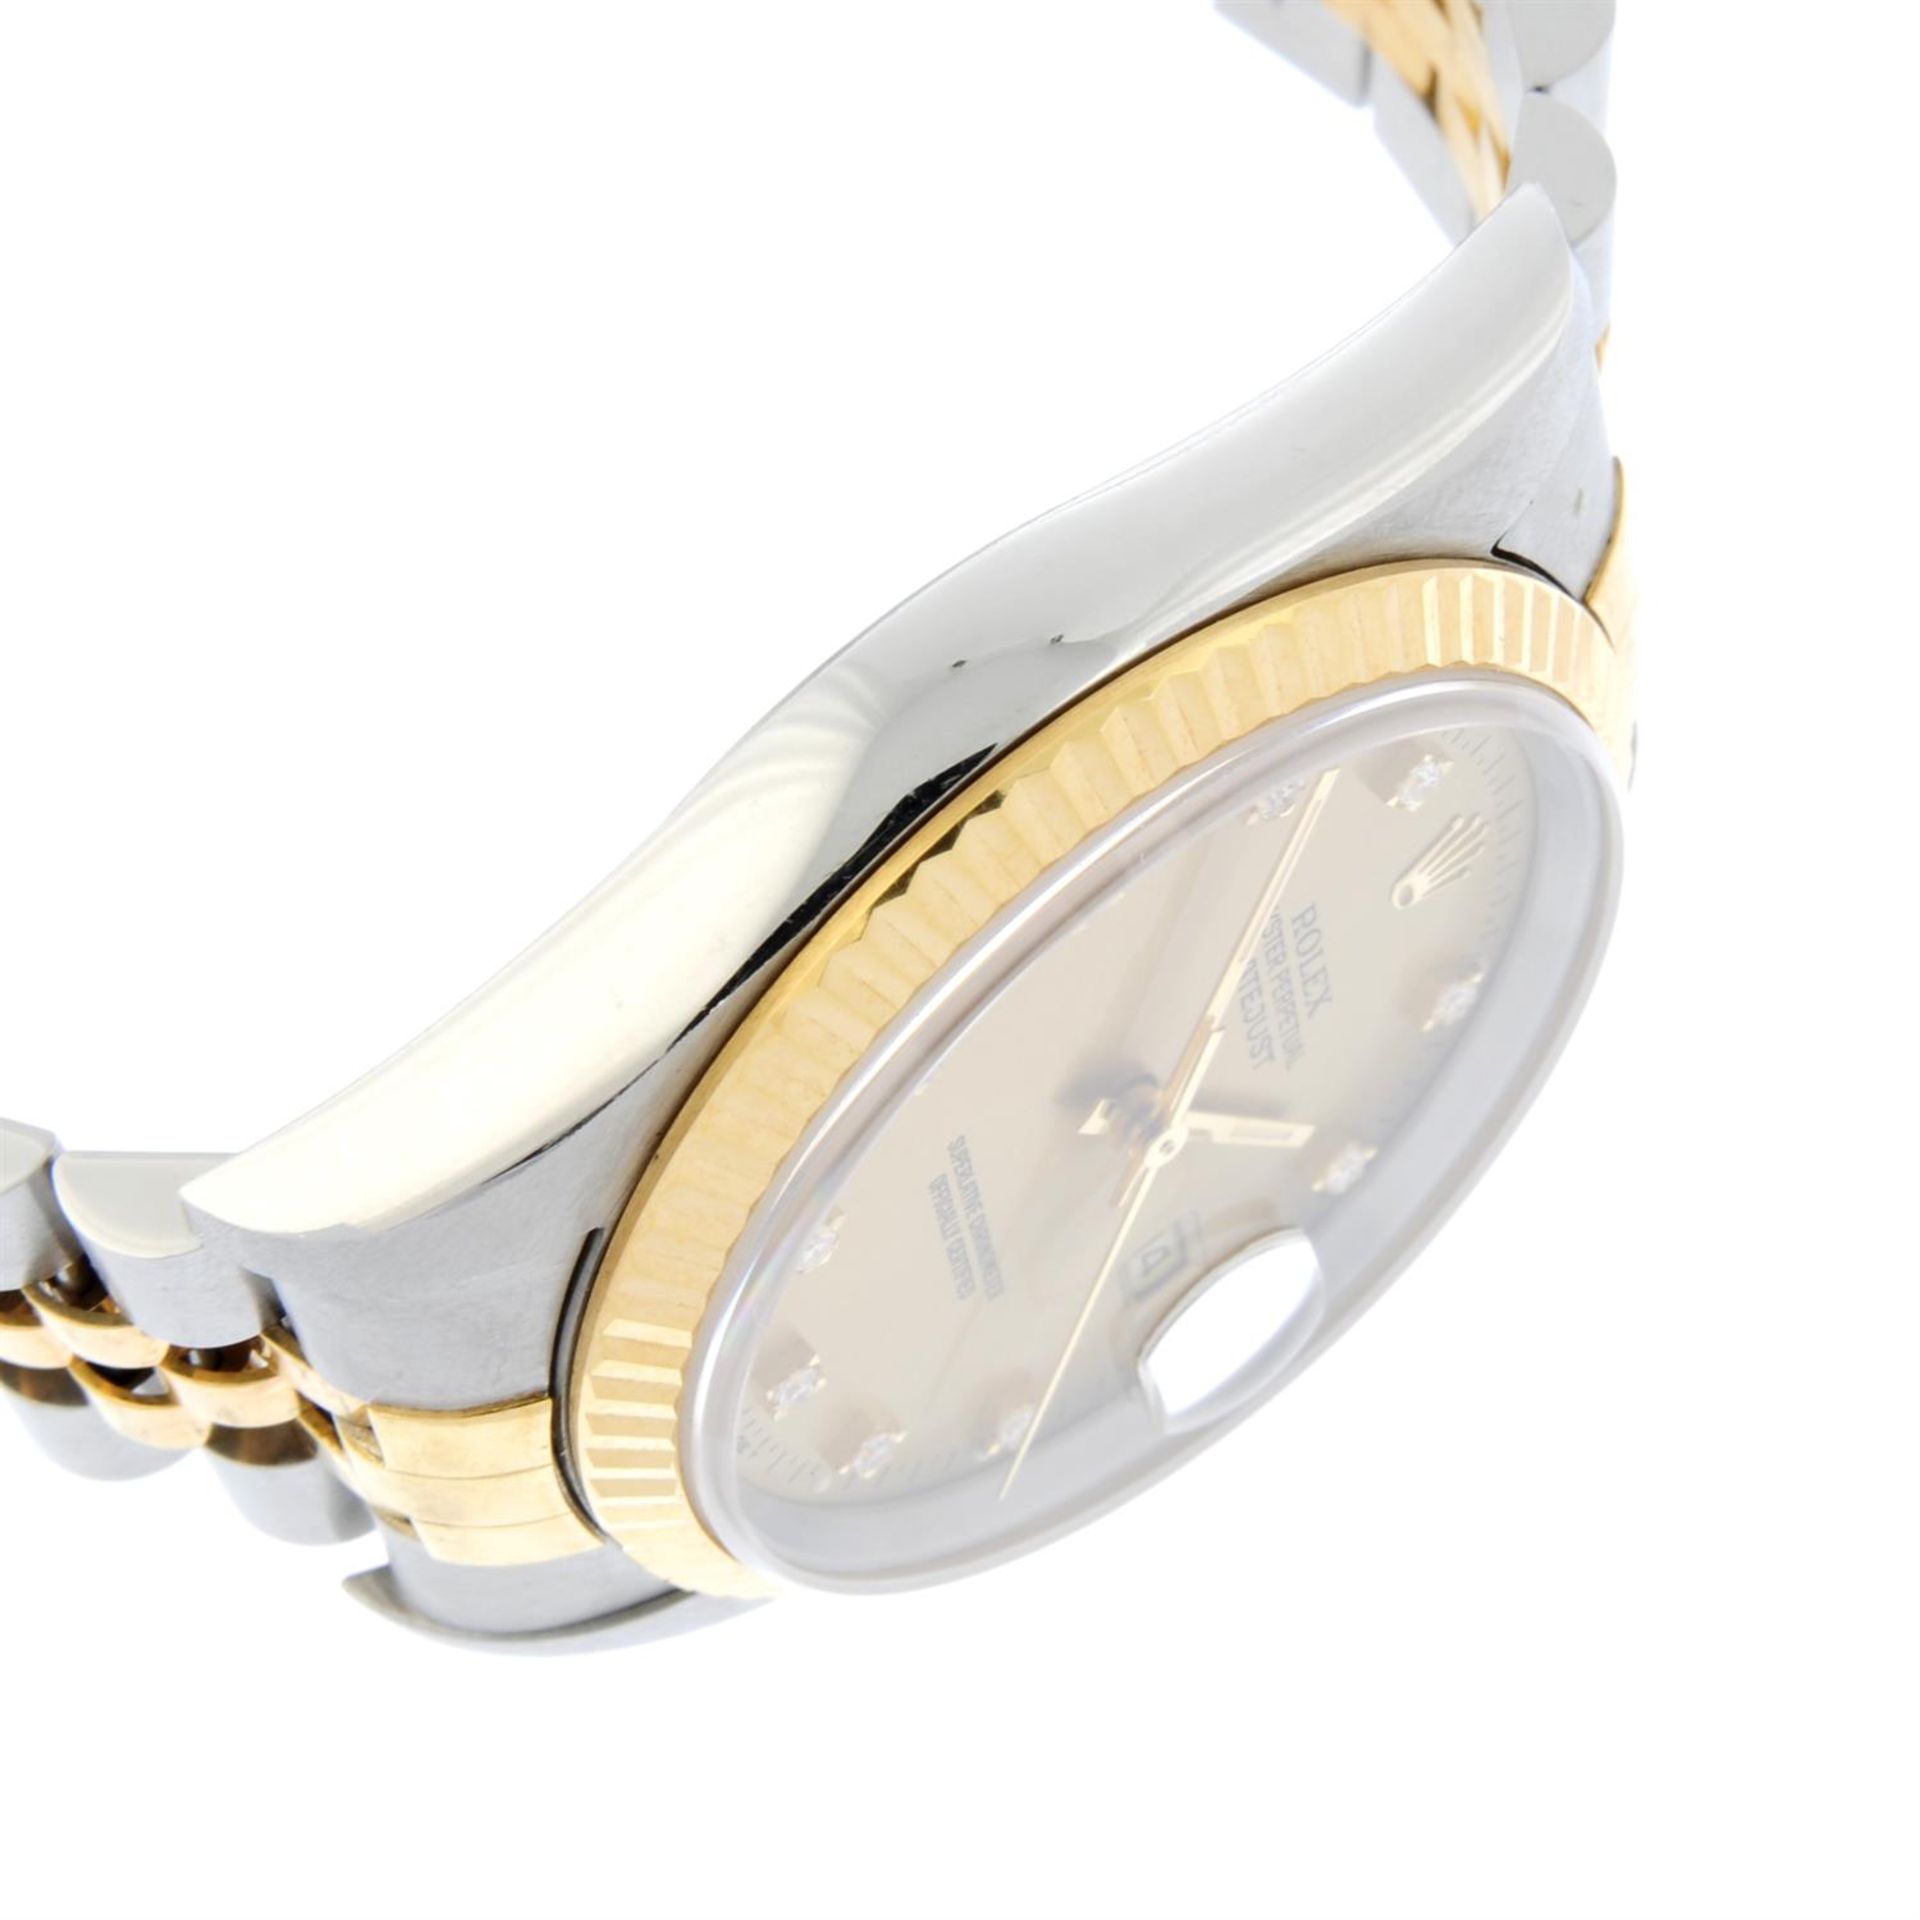 ROLEX - a bi-metal Oyster Perpetual Datejust bracelet watch, 36mm. - Image 4 of 6